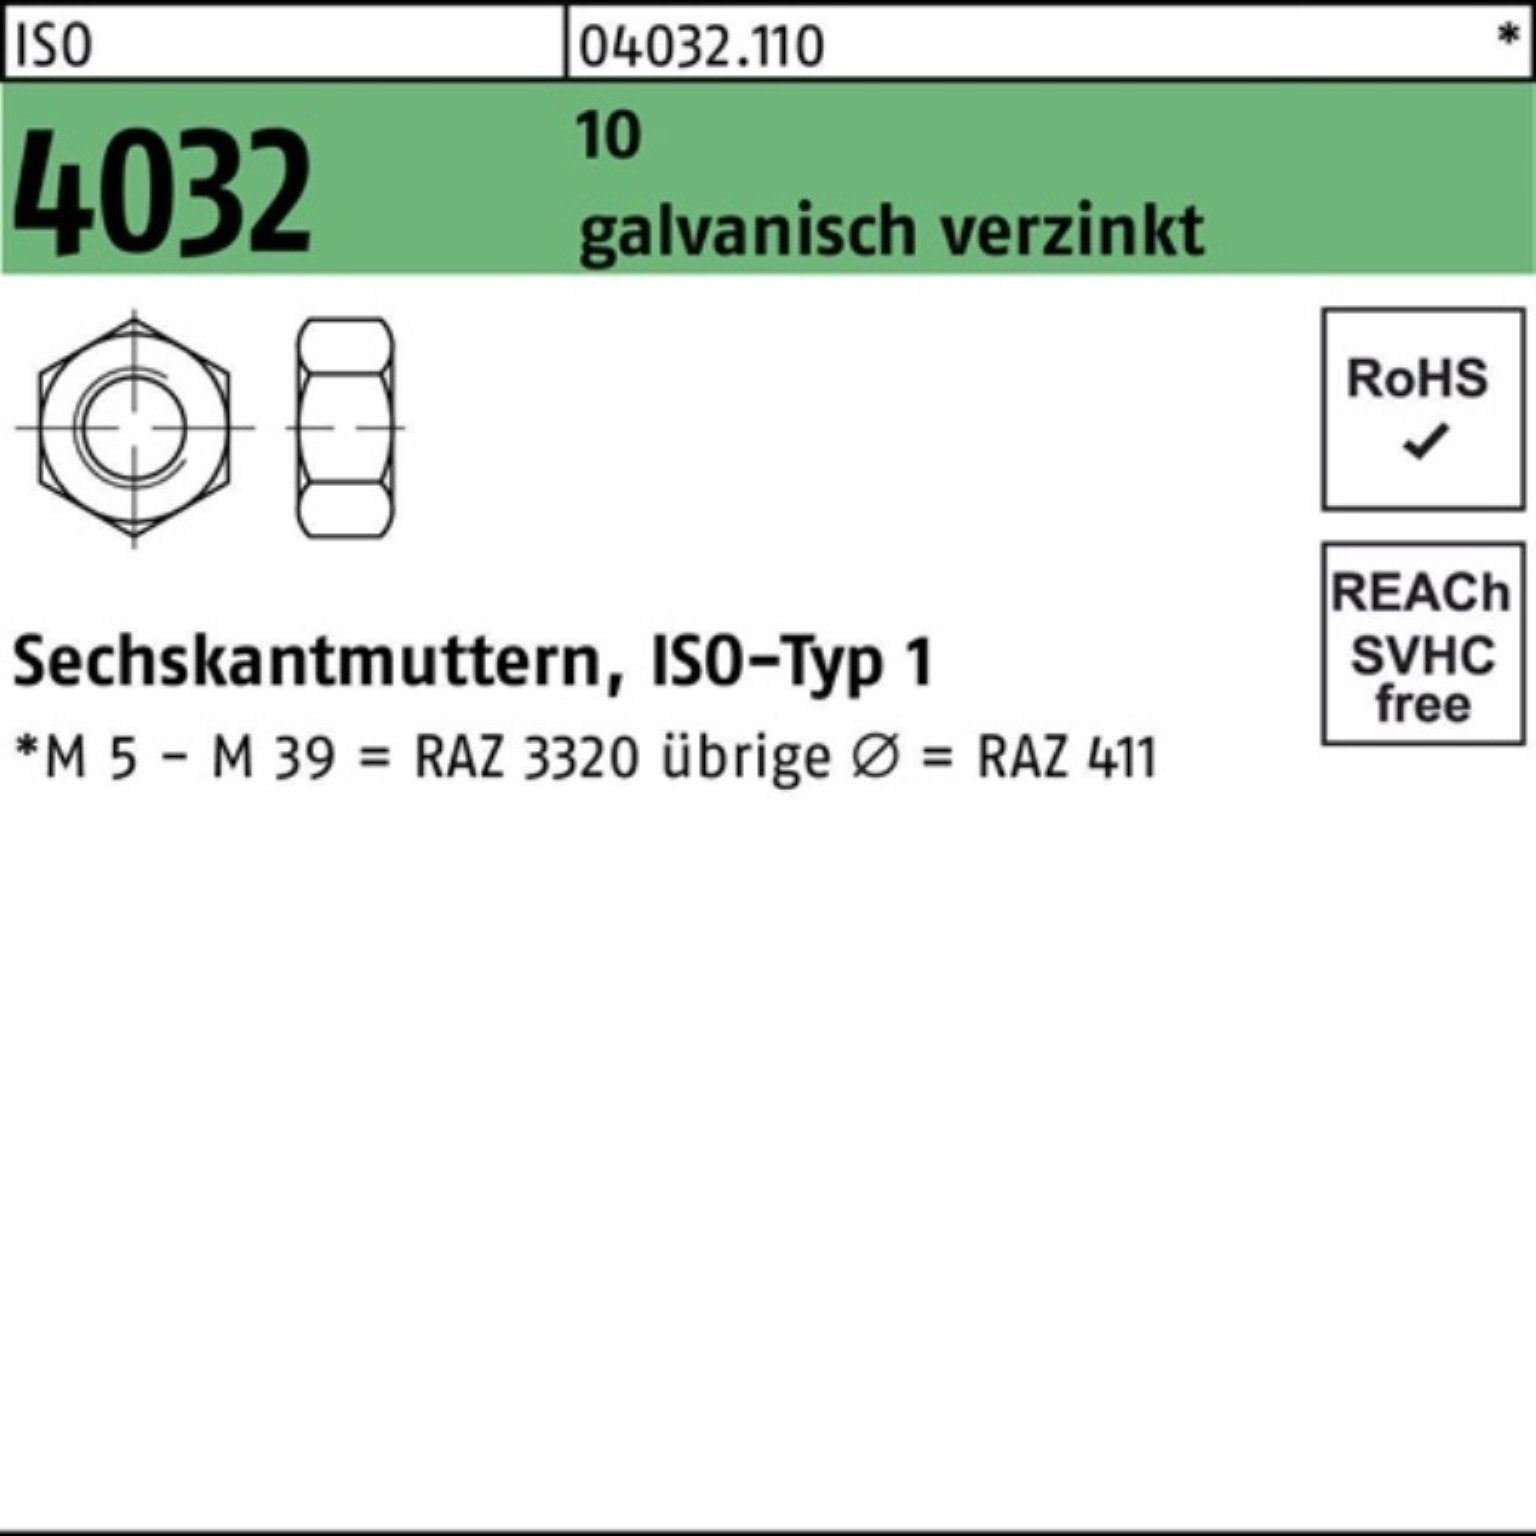 10 Stück galv.verz. 10 40 Sechskantmutter M33 4032 Bufab 100er Pack ISO Muttern ISO